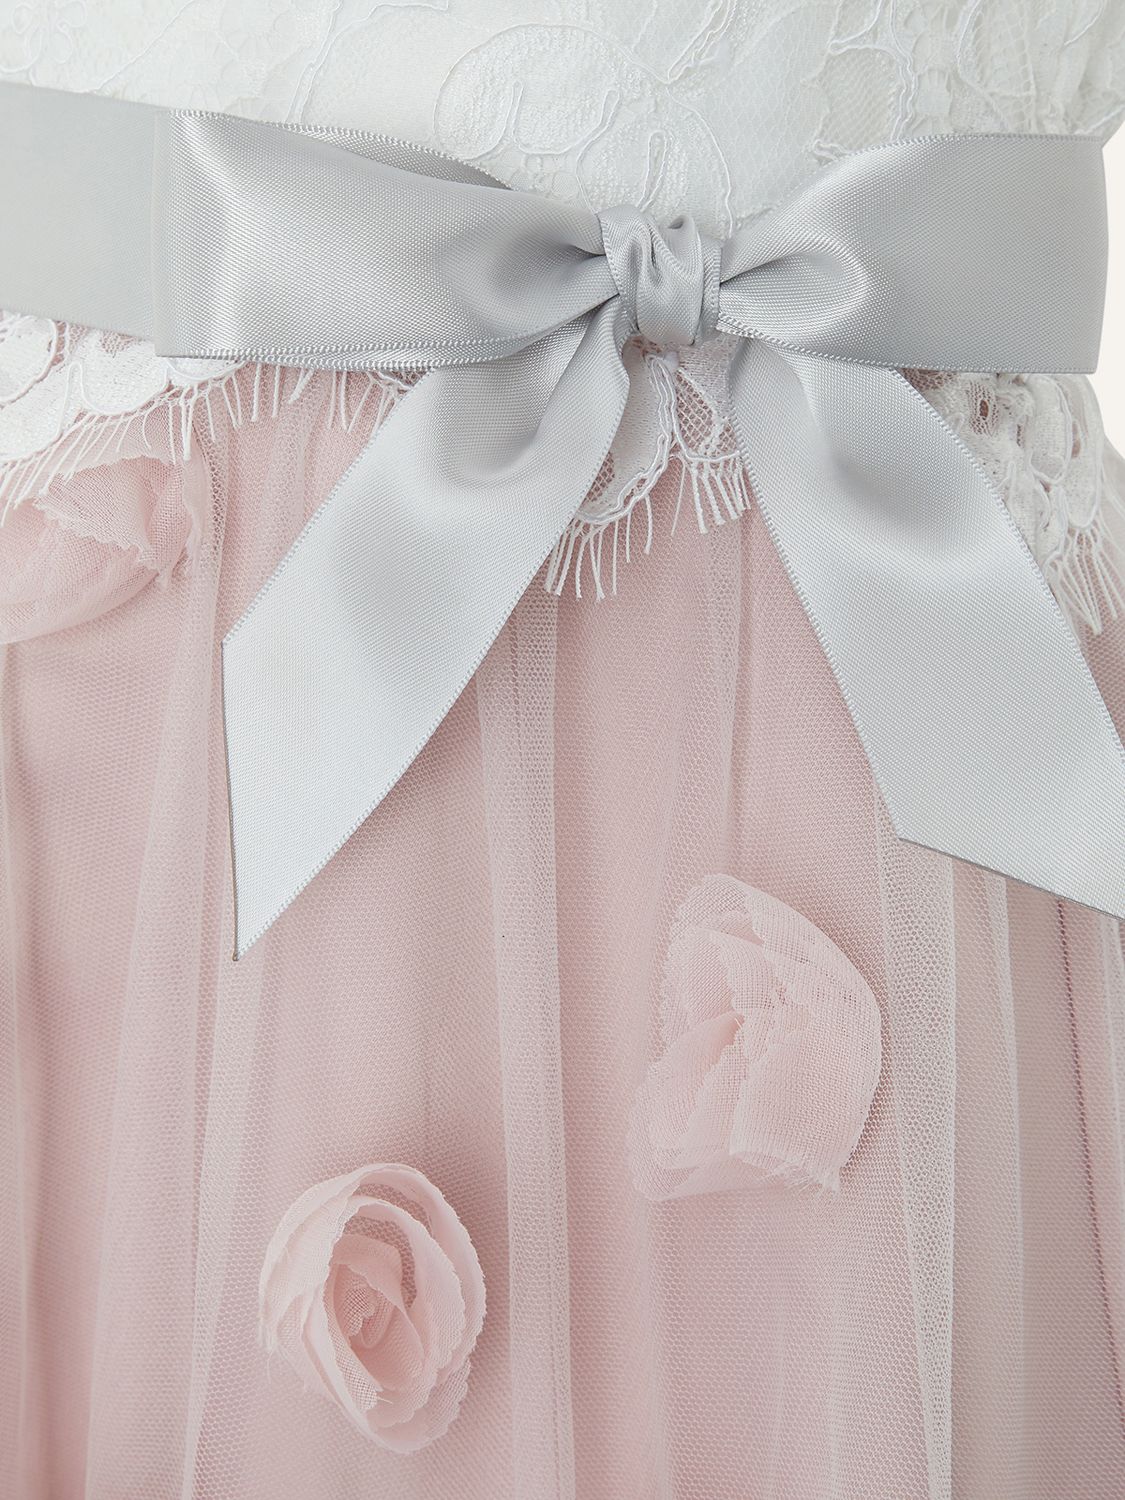 Monsoon Kids' Ianthe 3D Flower Party Dress, Dusky Pink, 3 years